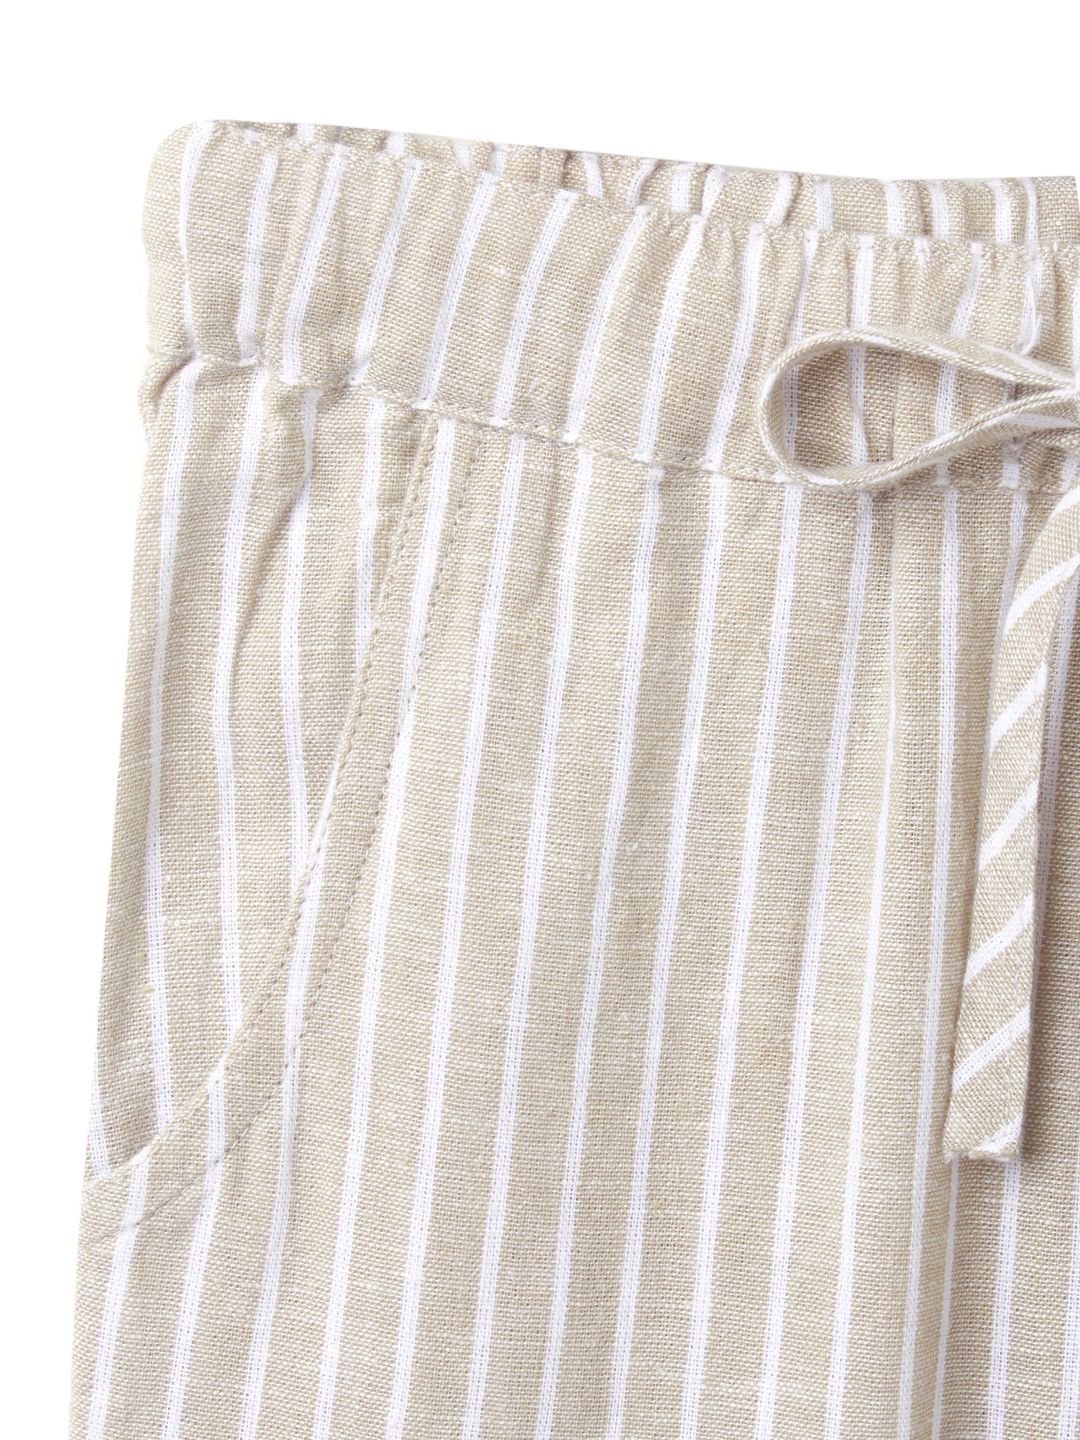 Liz Claiborne Belted Cropped Pants Size Petite X-LARGE Beige Flax Stripe  New | eBay